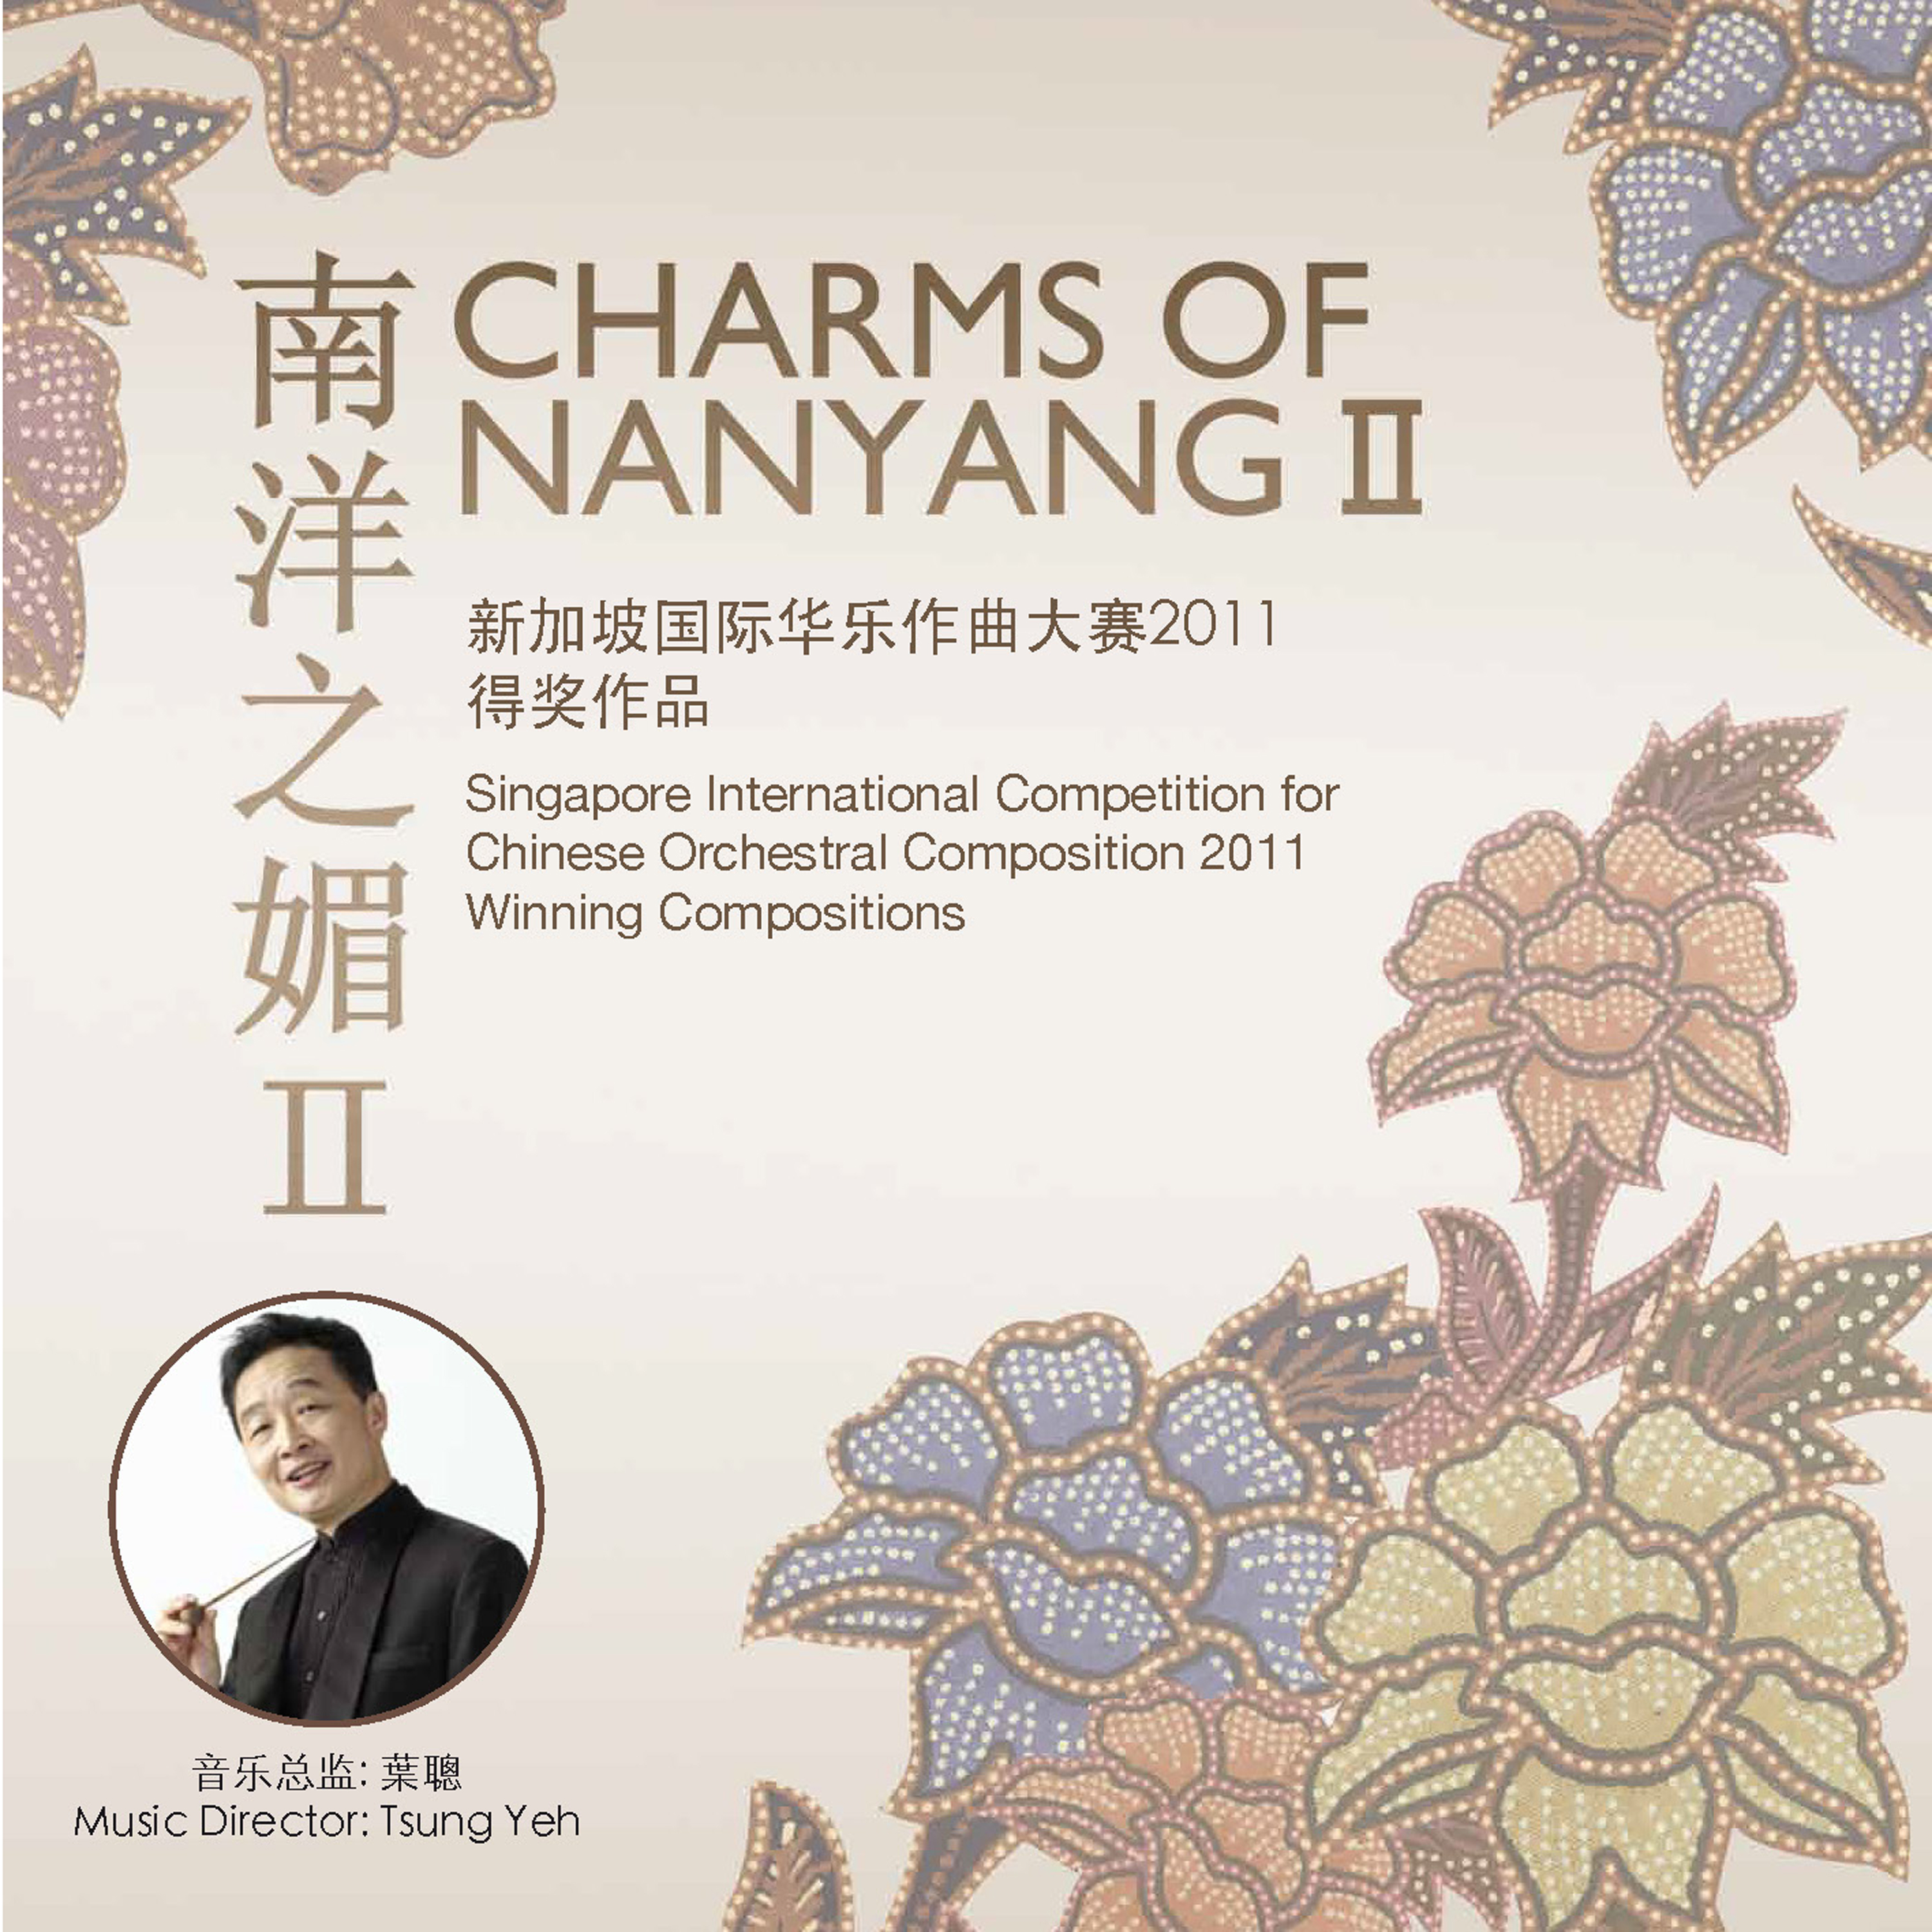 Charms-of-Nanyang-2-n 光碟与周边商品